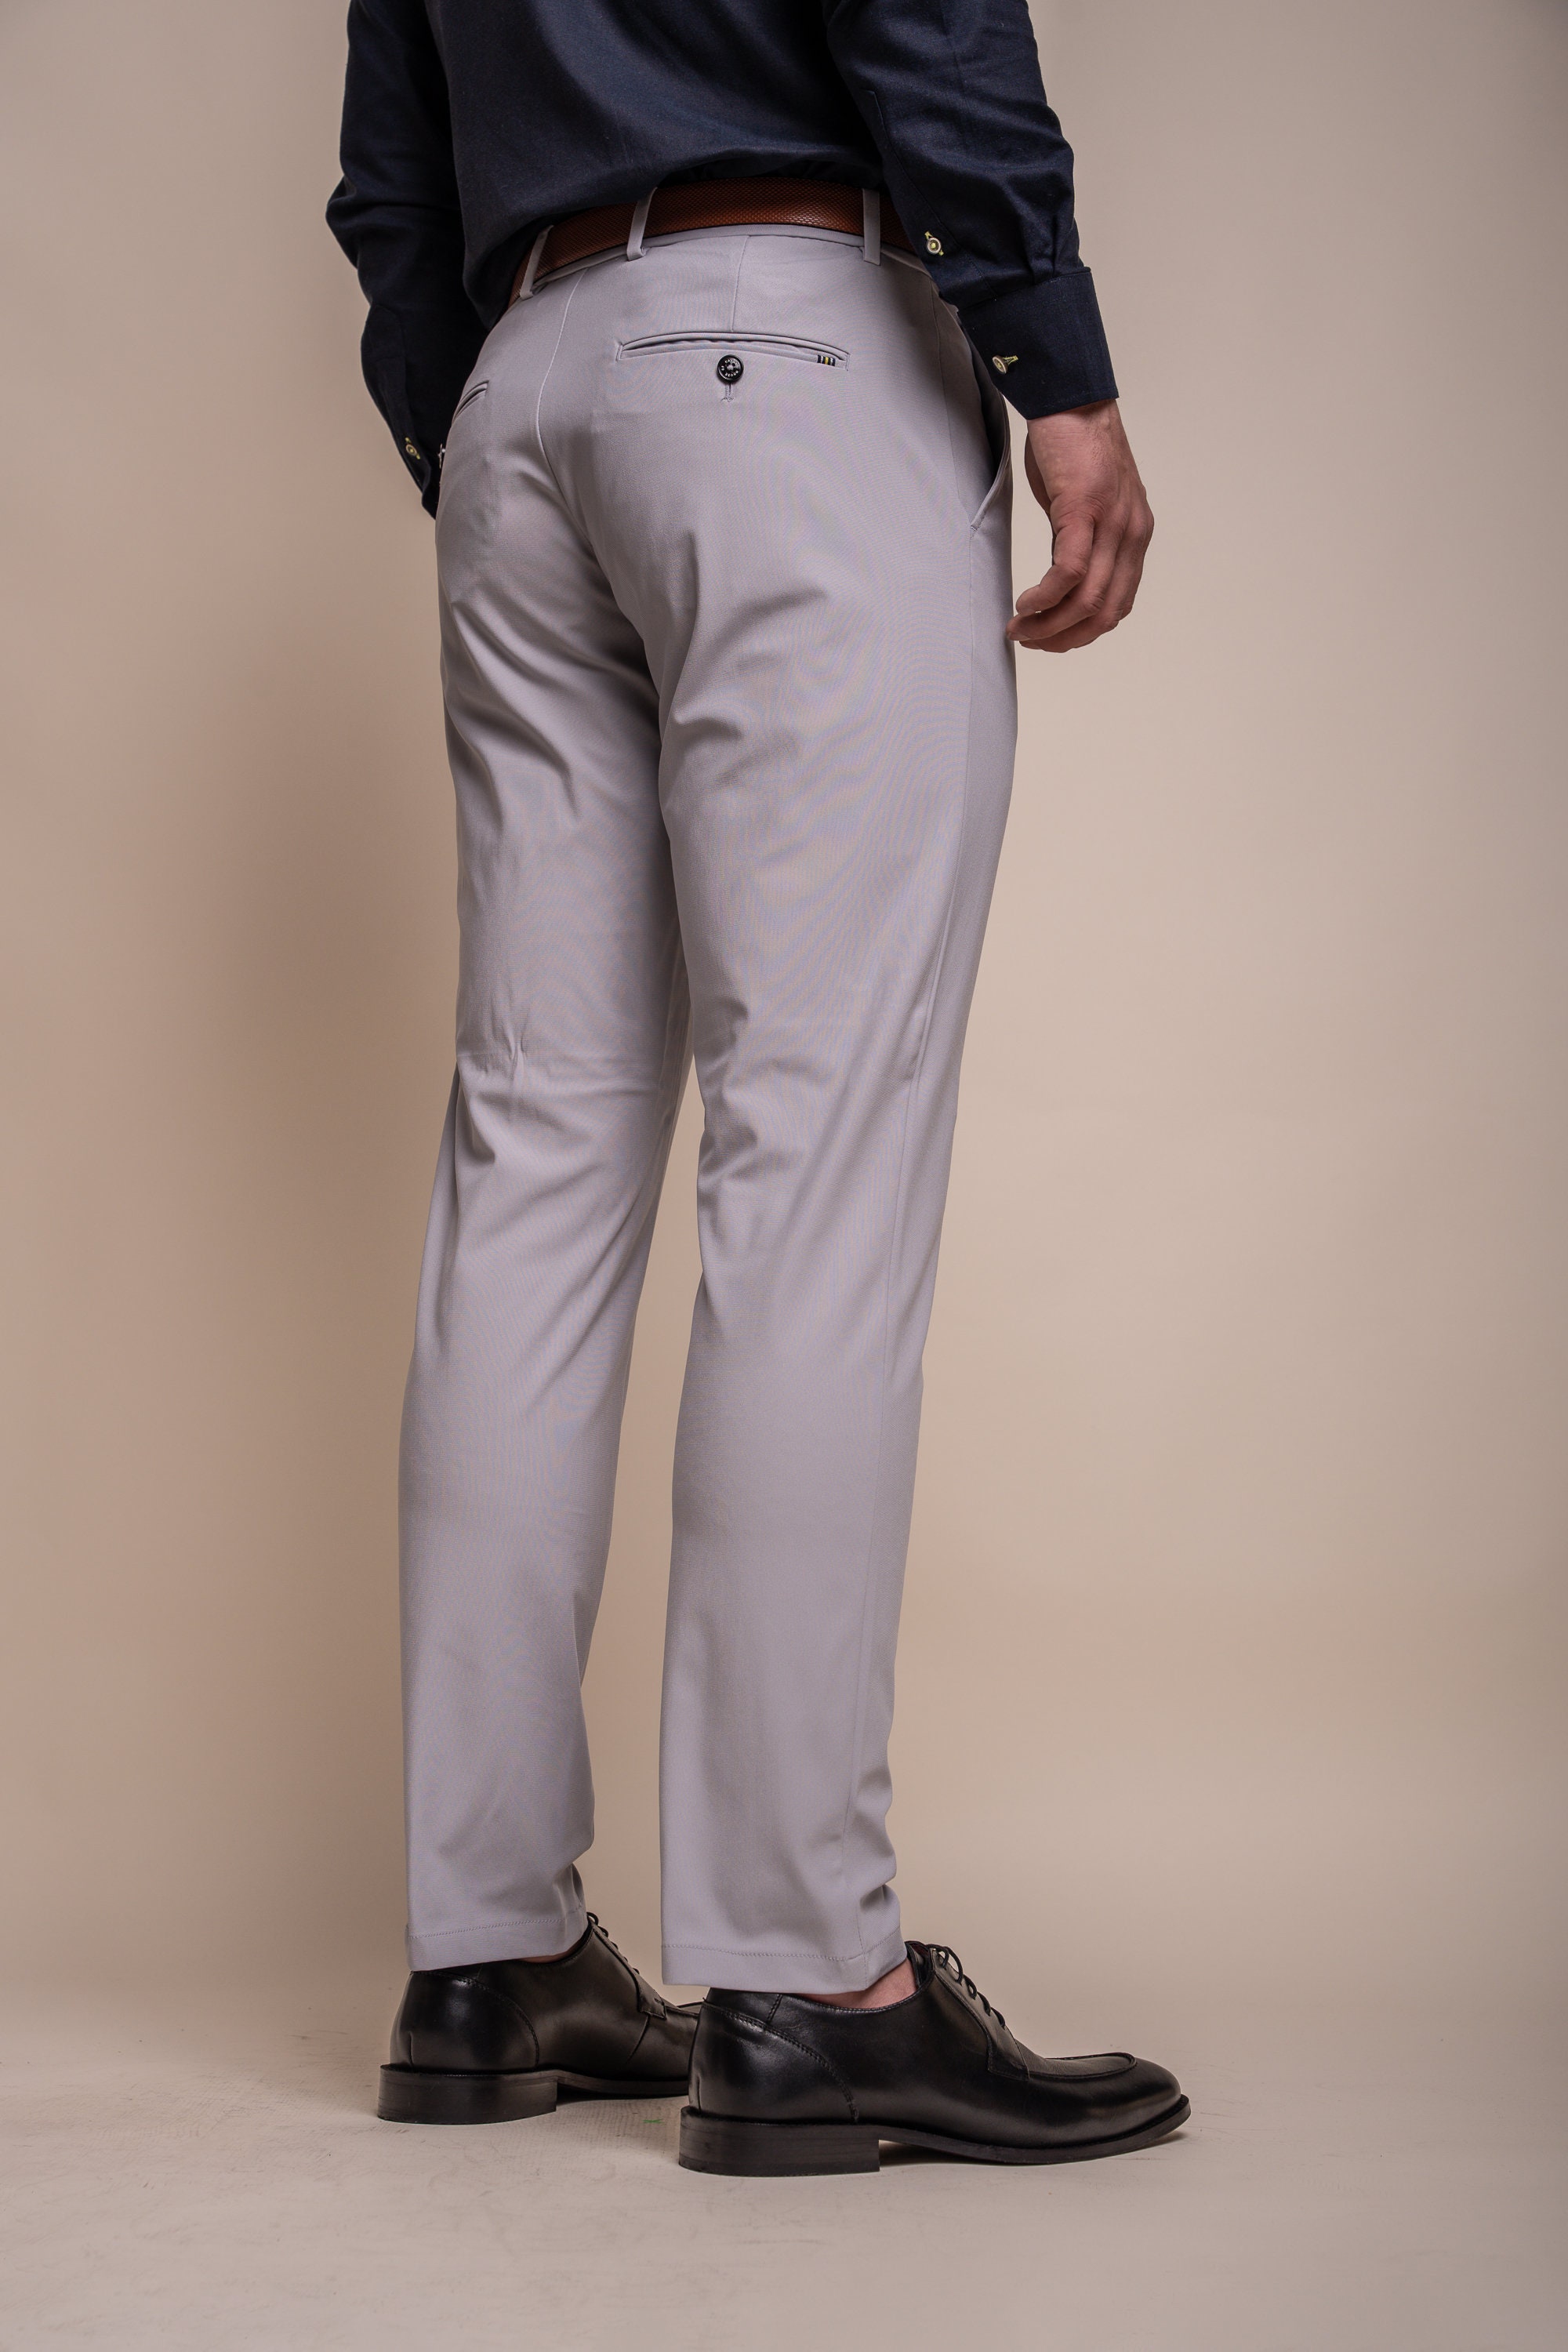 Men's Plain Black Slim fit Casual Semi-Formal Pants Regular Smart Pants  Waist 30 : Clothing, Shoes & Jewelry 